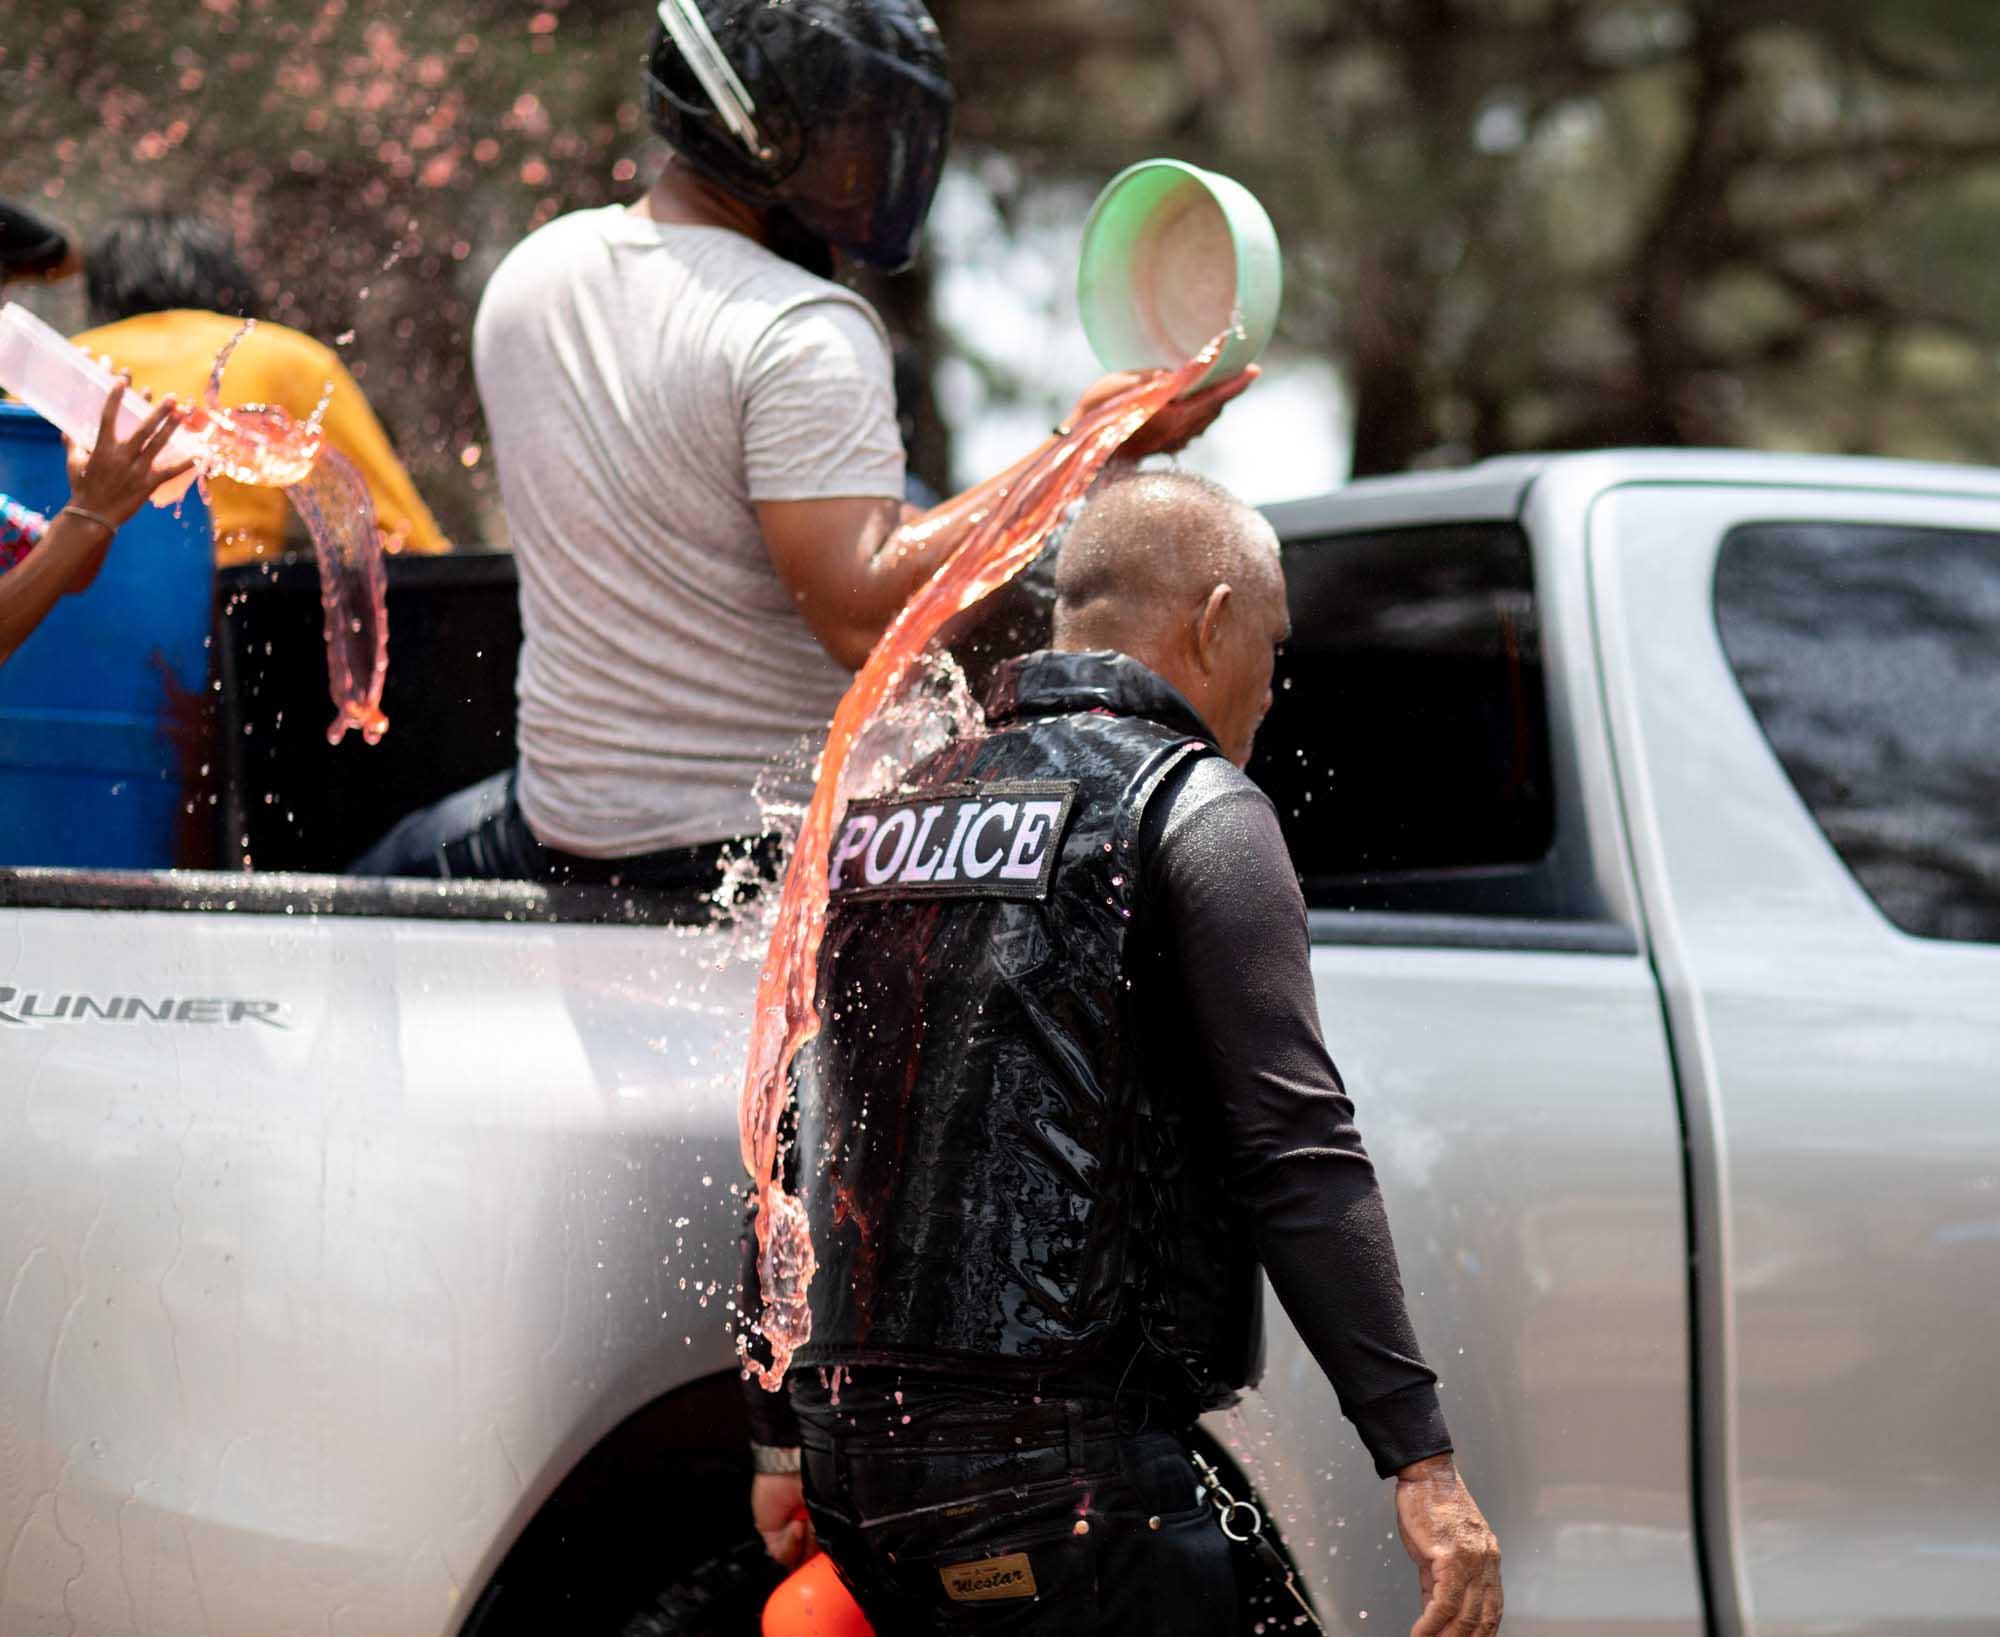 Thai man dumping water on a police officer - Songkran water festival in Phuket, Thailand